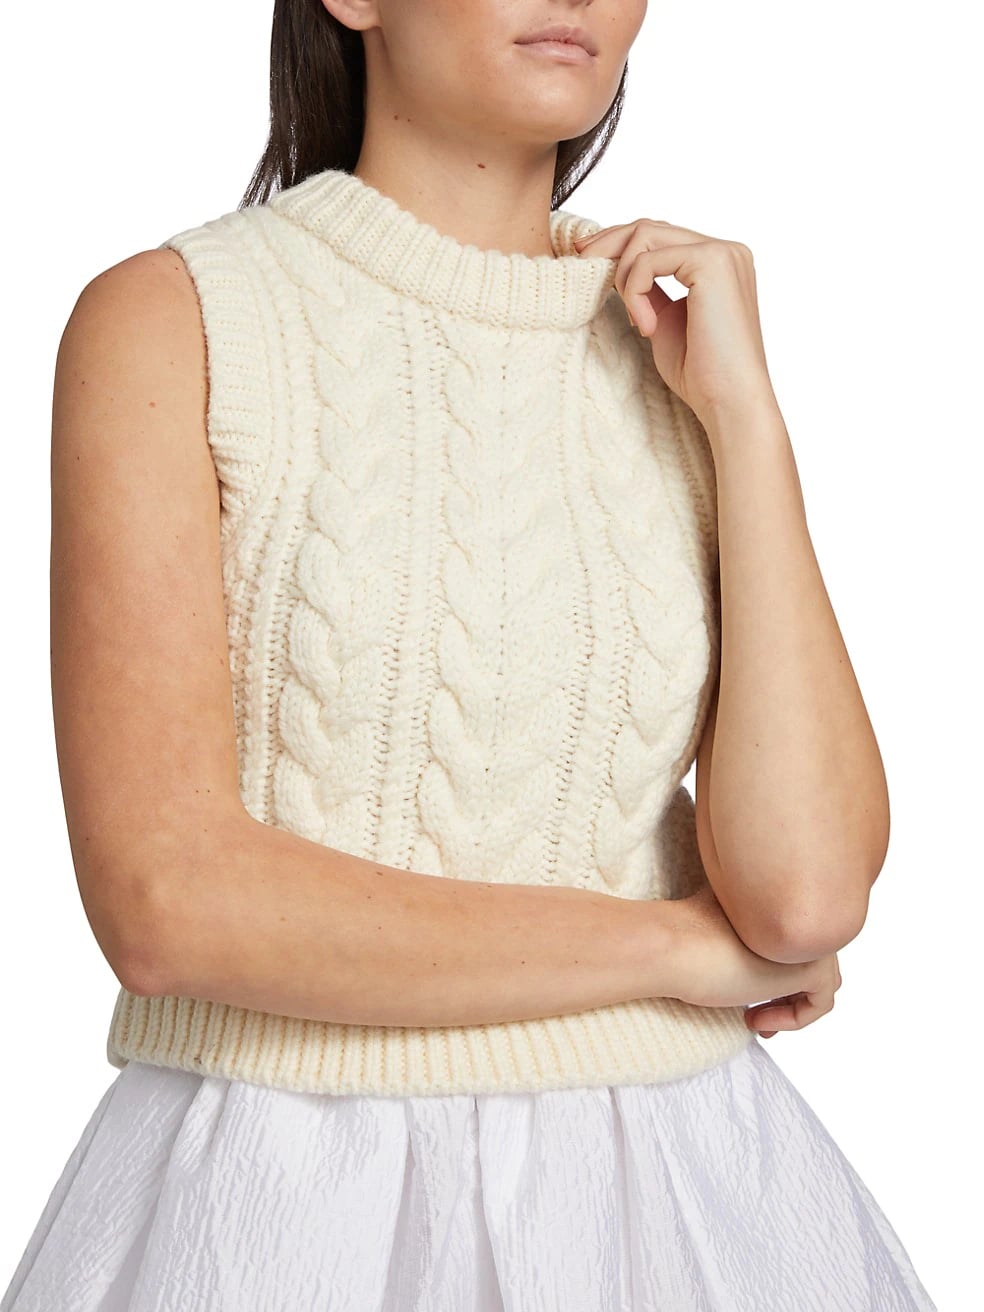 Sweater vests are popular on TikTok and with K-pop stars - Vox